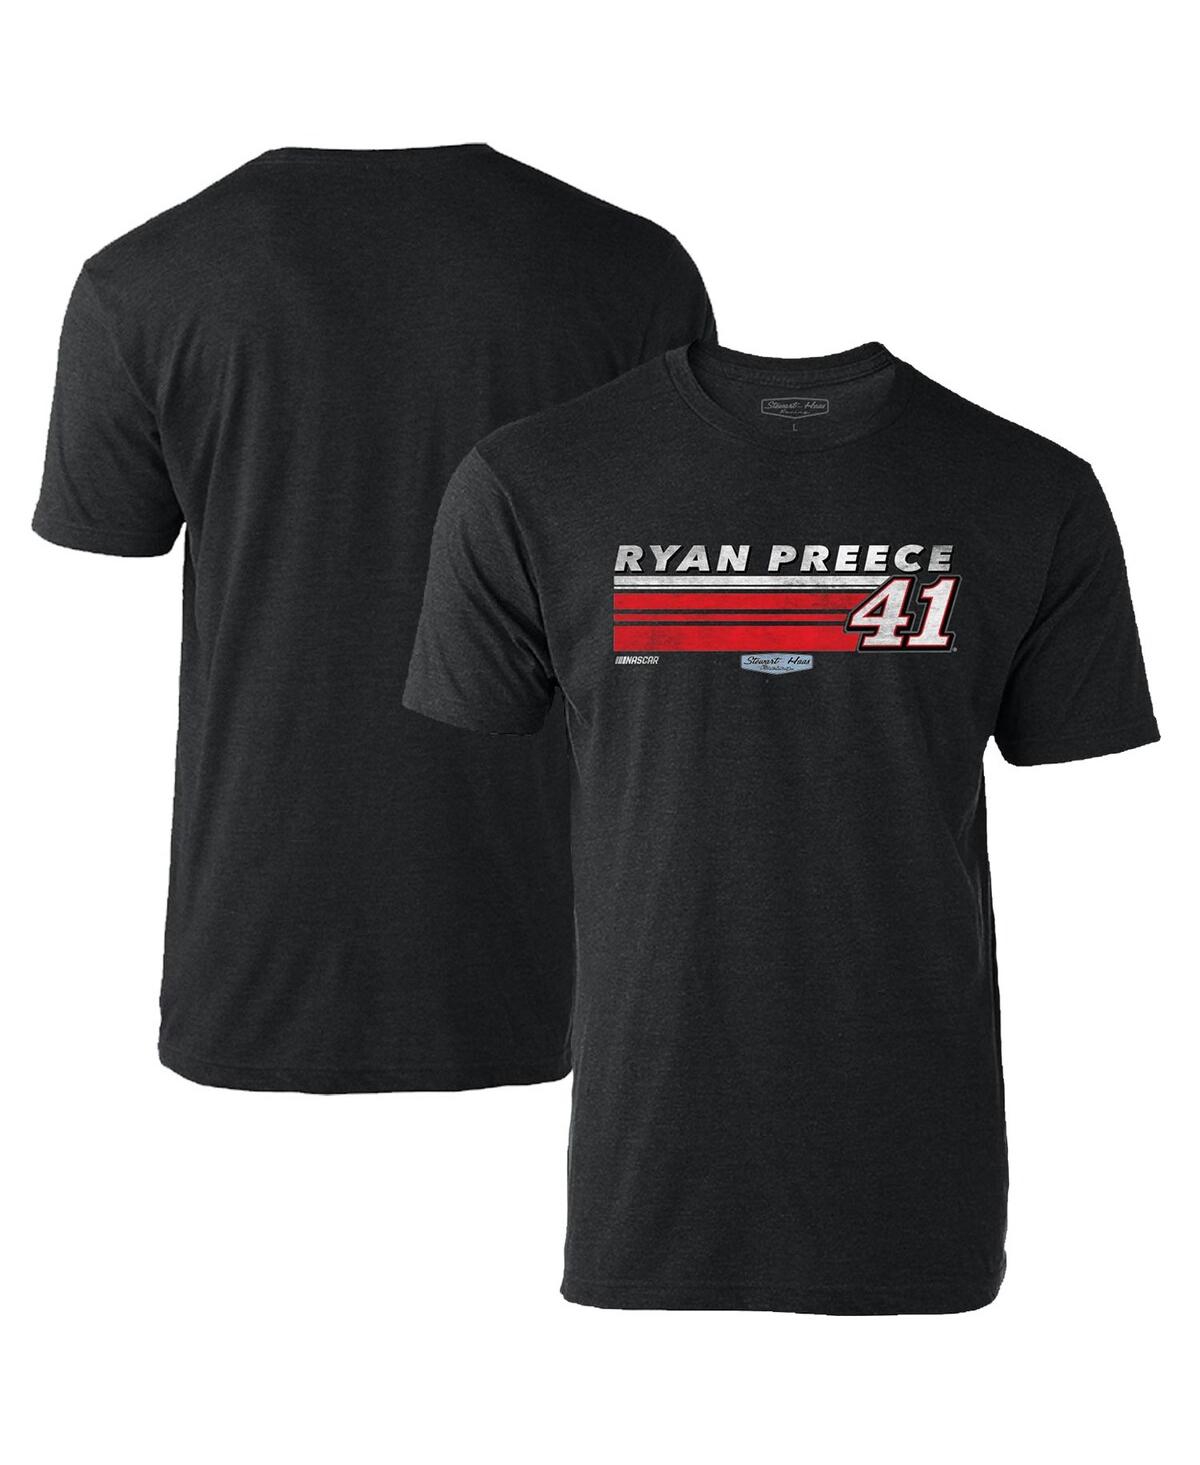 Stewart-haas Racing Team Collection Men's  Heather Charcoal Ryan Preece Hot Lap T-shirt